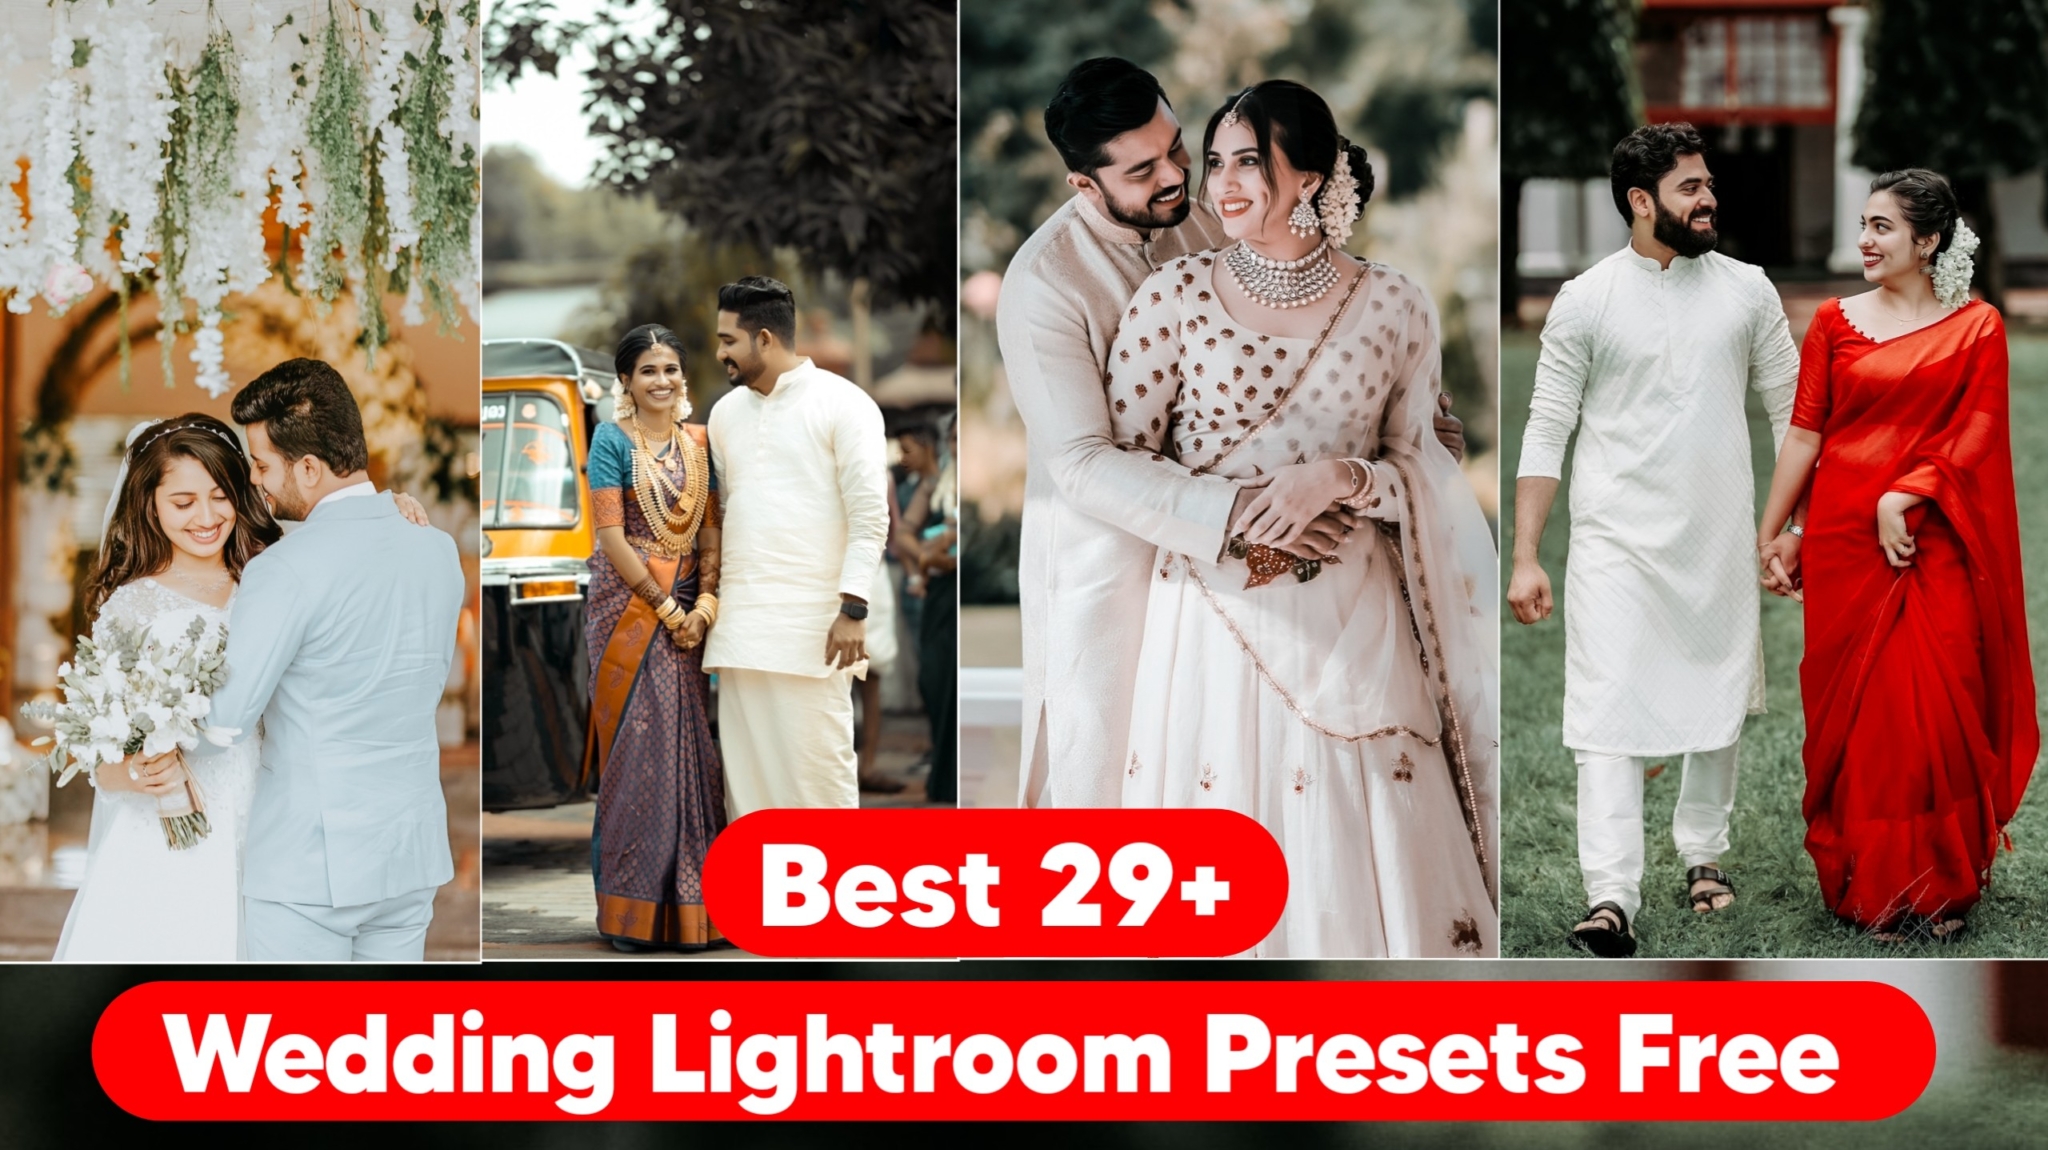 Best 29+ Wedding Lightroom Presets